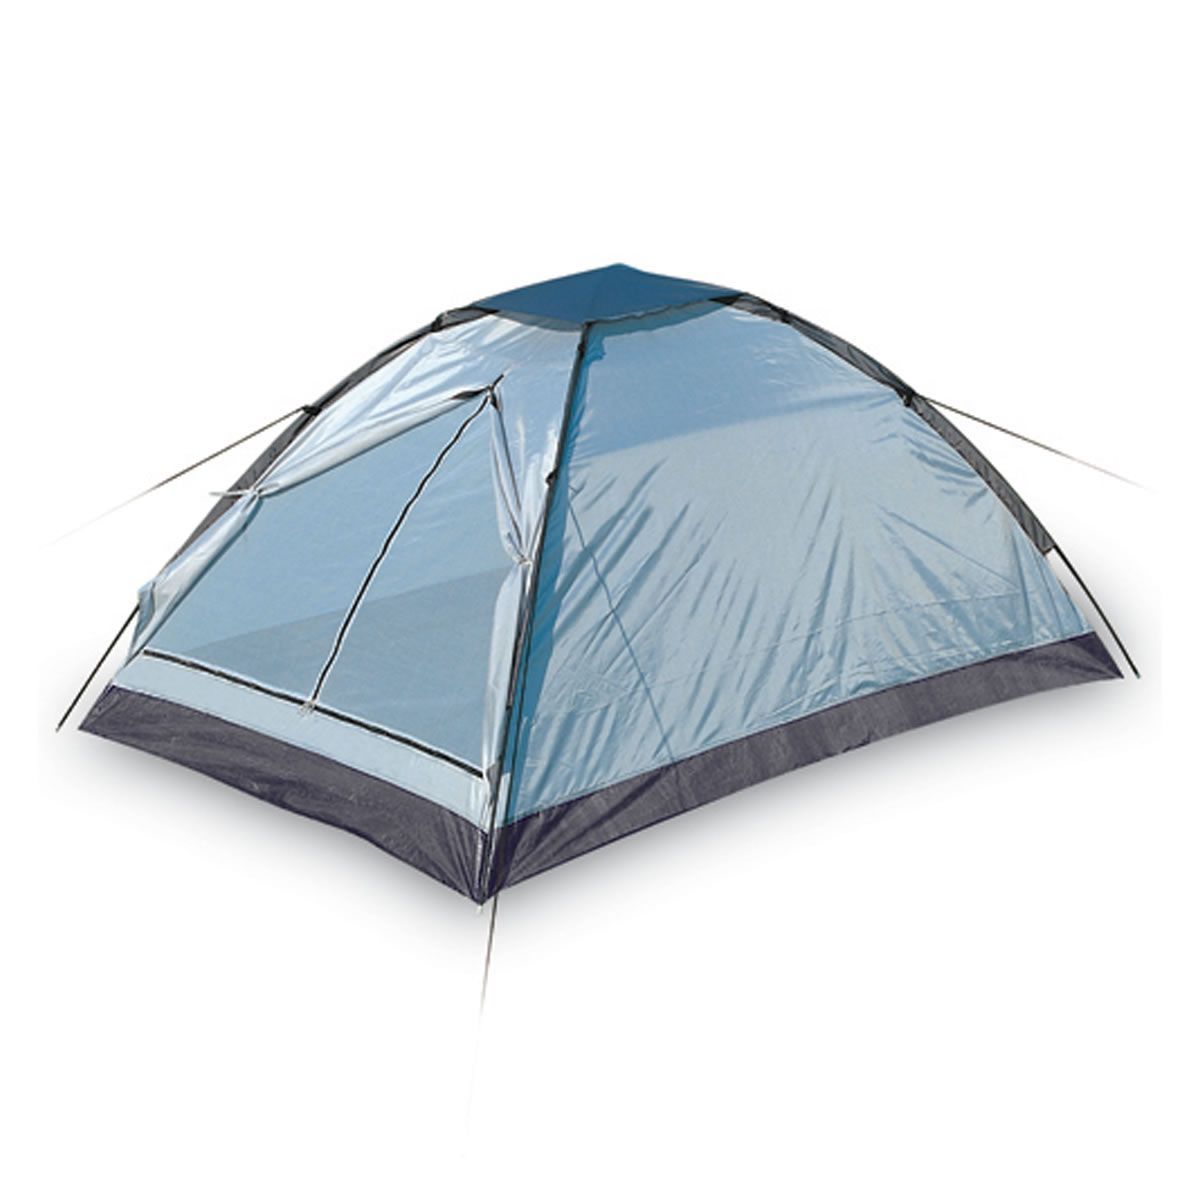 2 Person Dome Tent | Crazy Sales